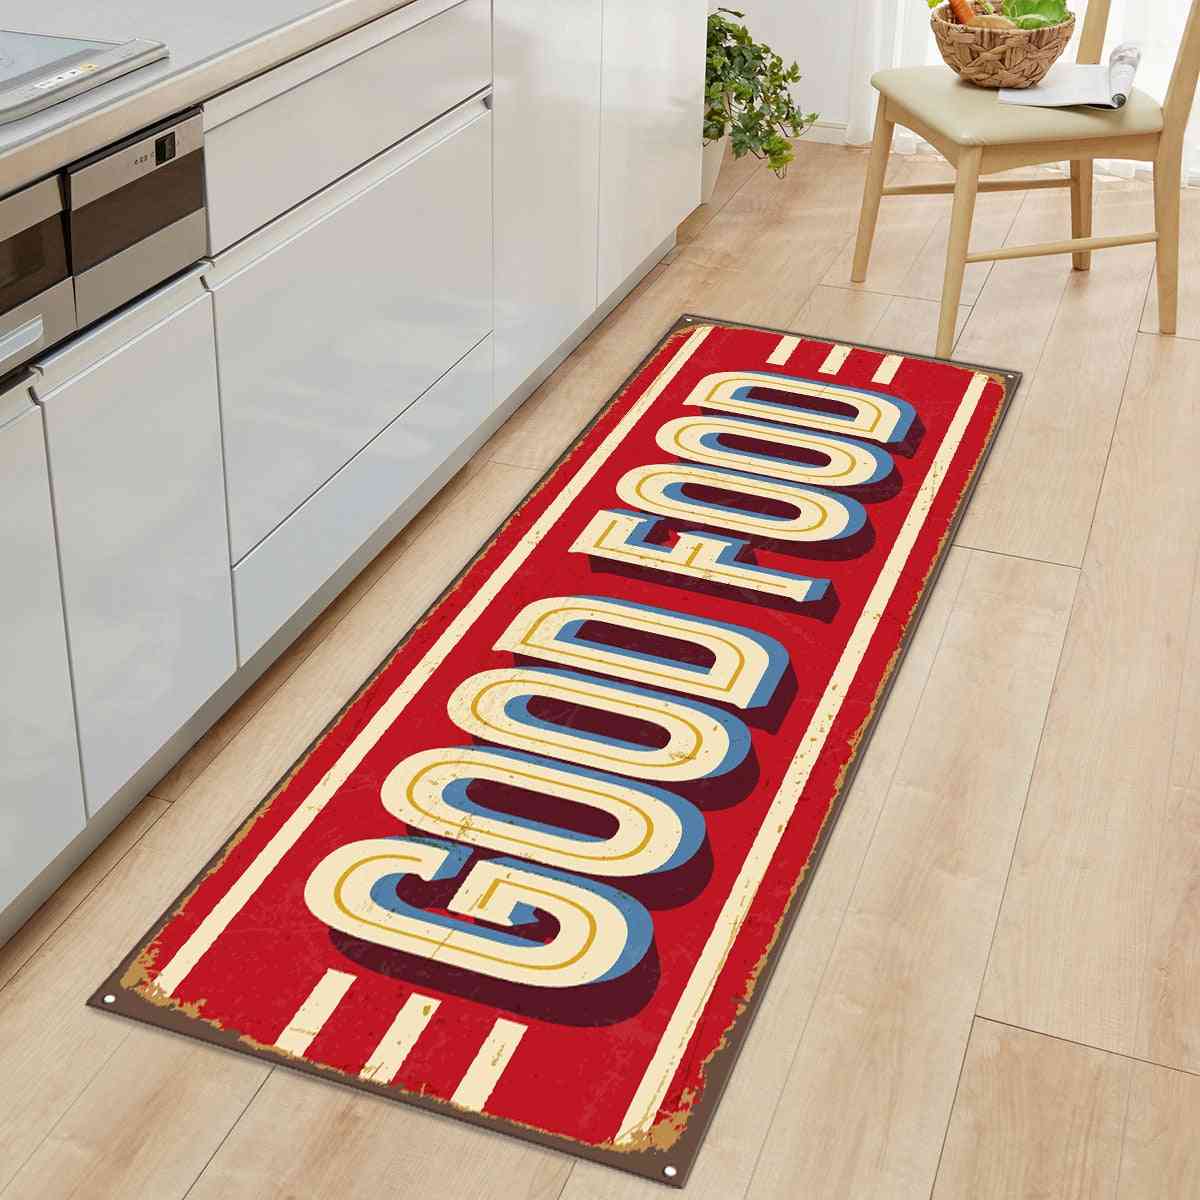 Non-slip Doormats Kitchen Rug Carpet